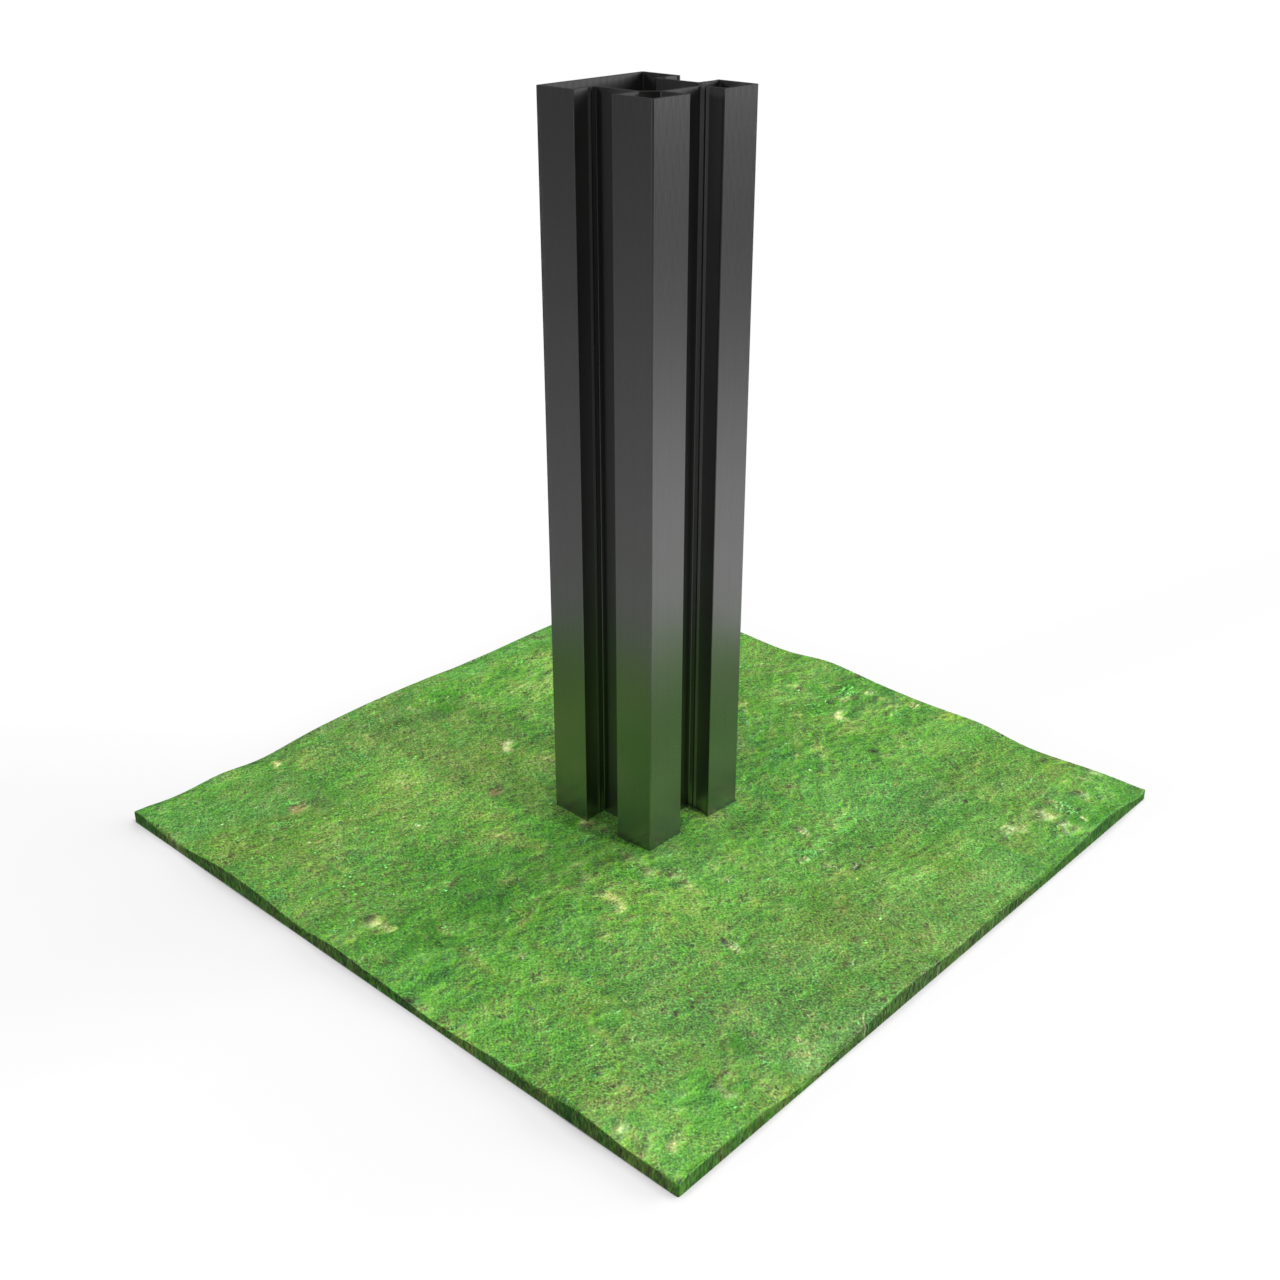 Der Aluxus® Zaunpfosten als 3D Modell